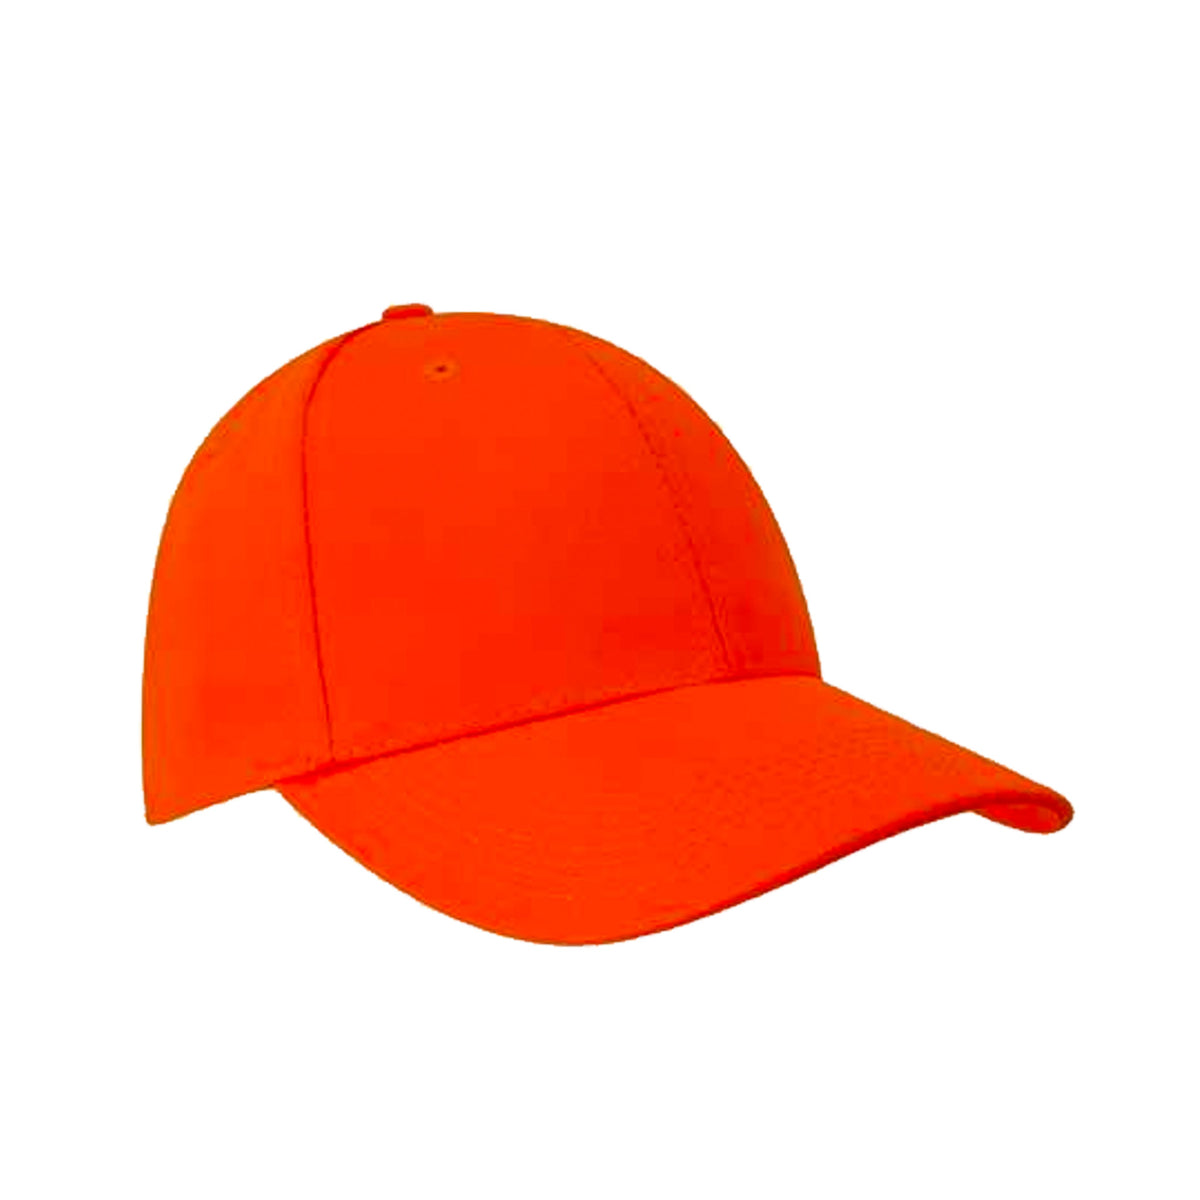 orange luminescent safety cap